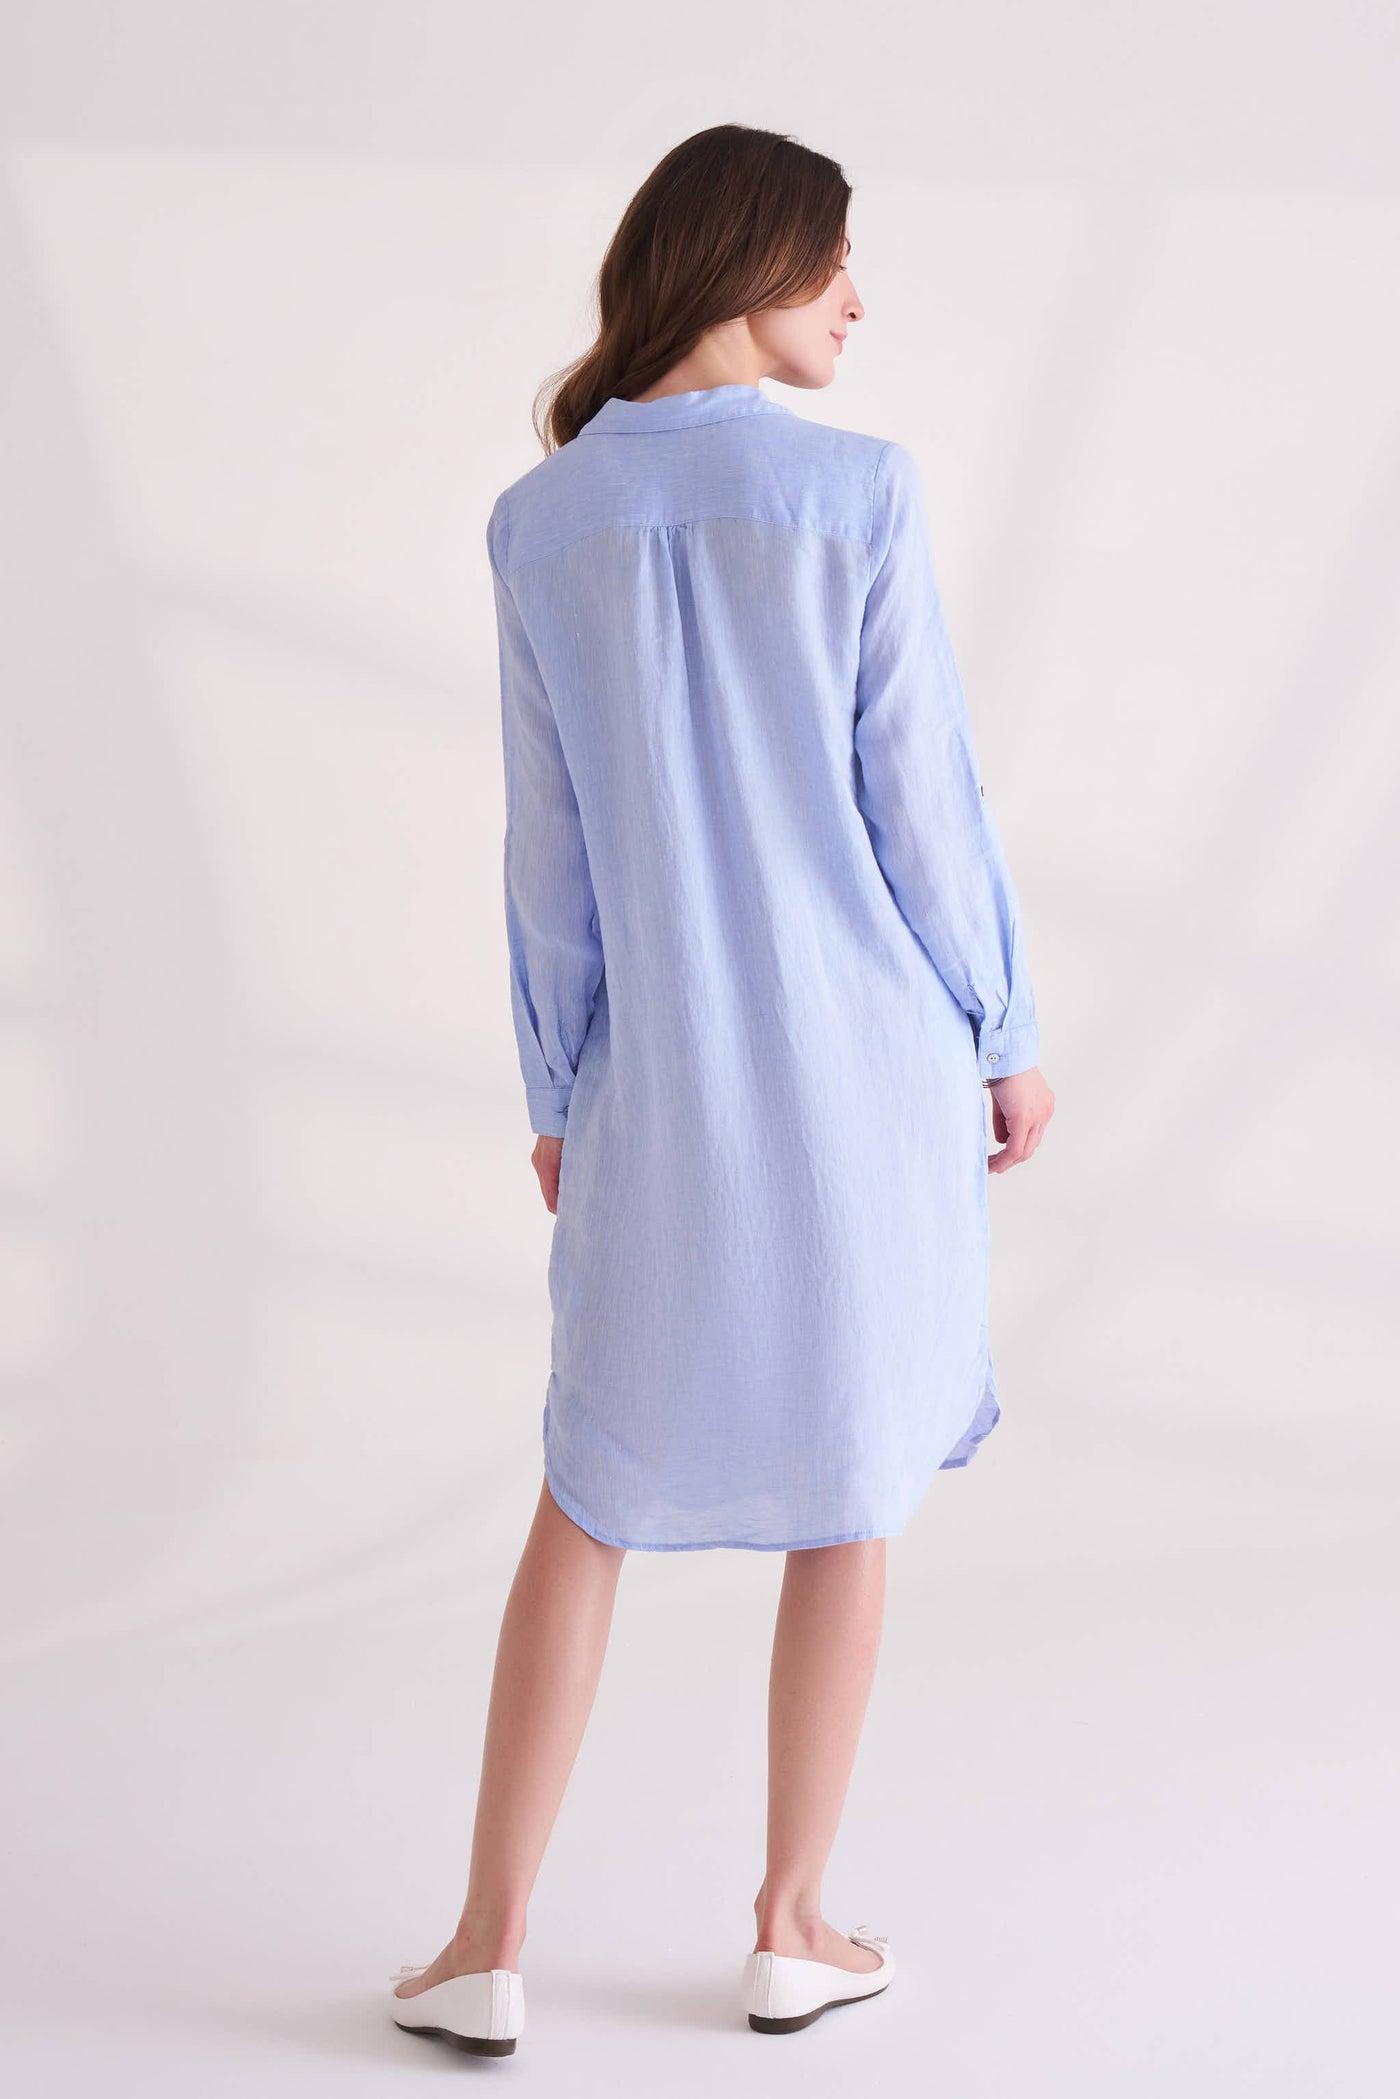 Chambray Blue Linen Dress